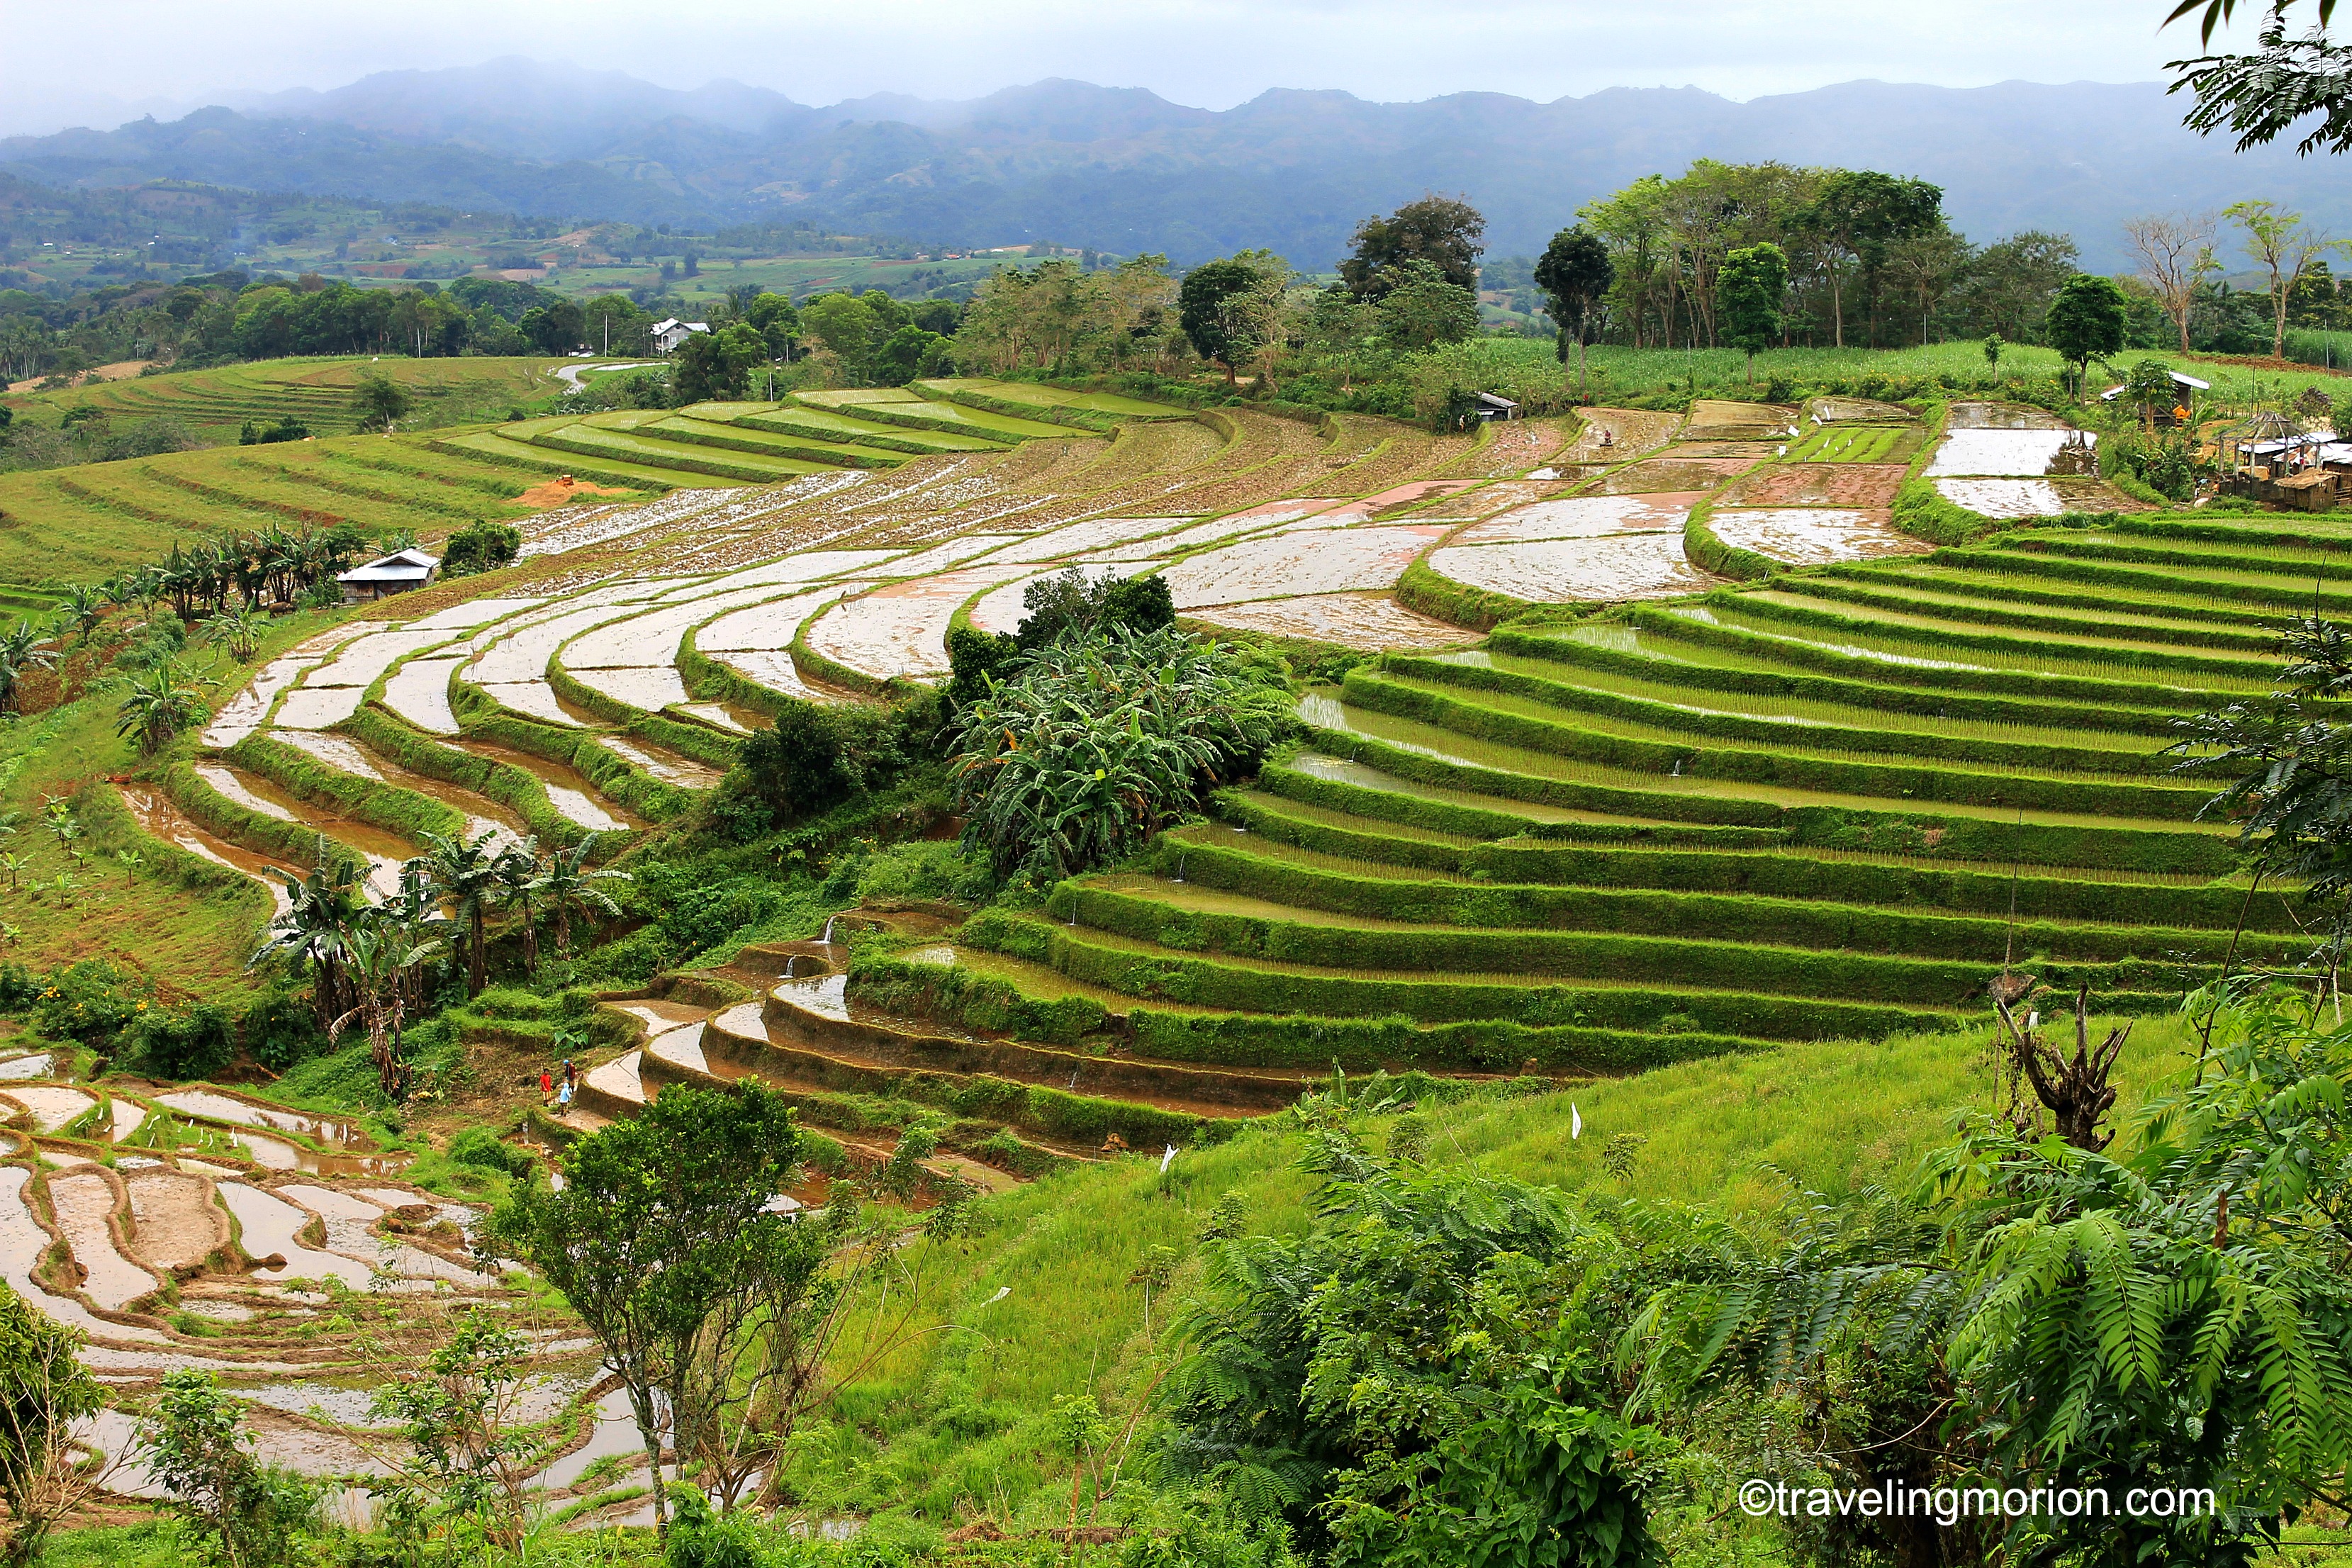 Codcod Rice Terraces of San Carlos City, Negros Occidental